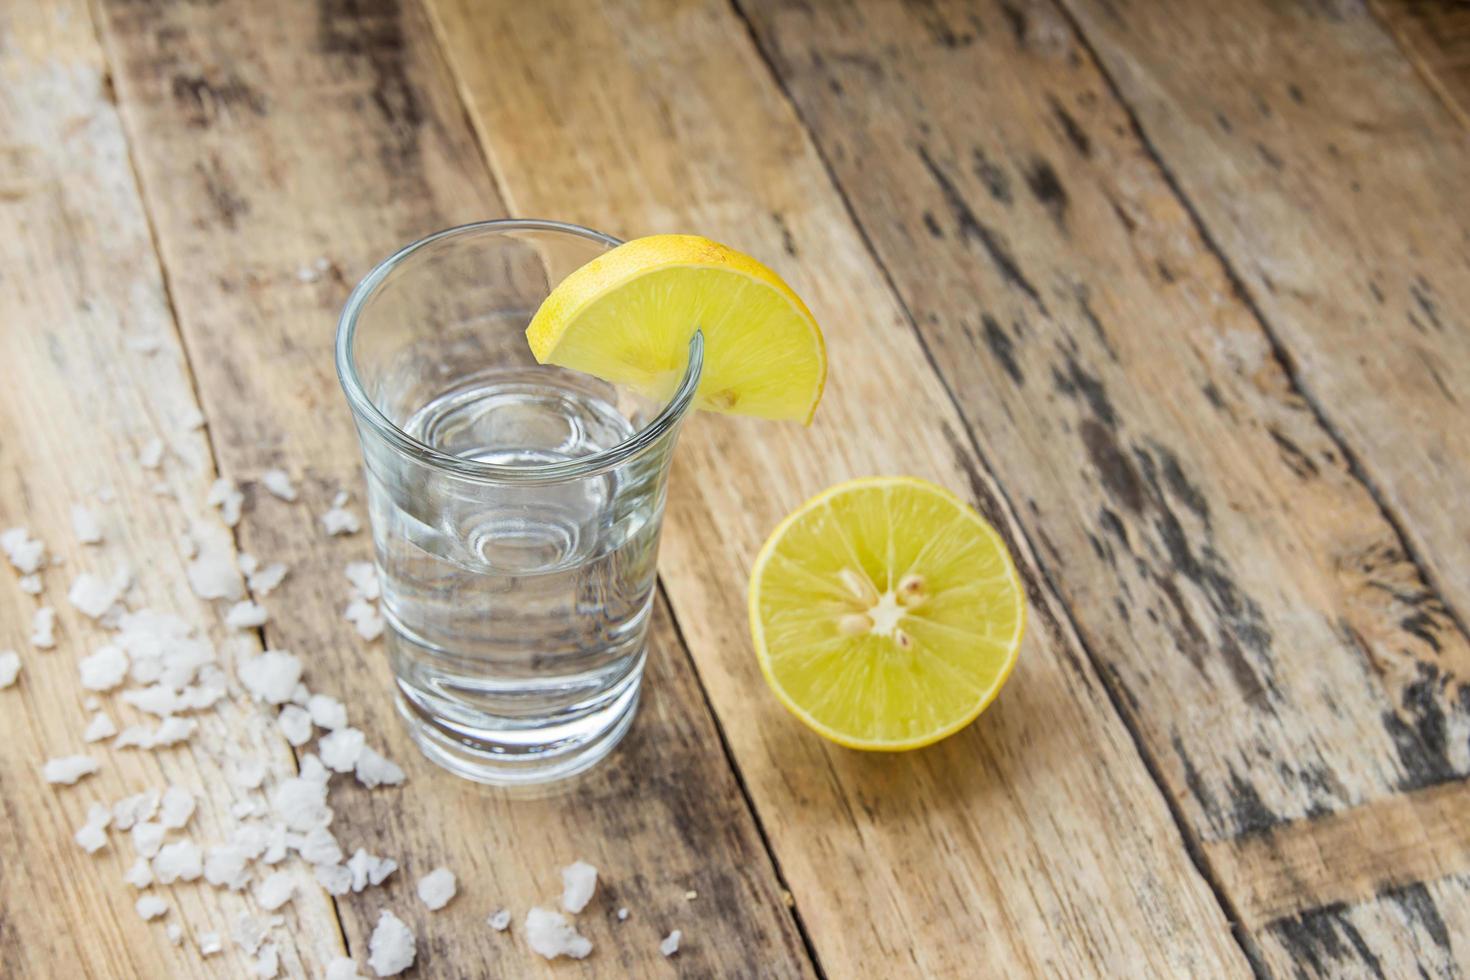 Vodka with lemon on wooden background photo